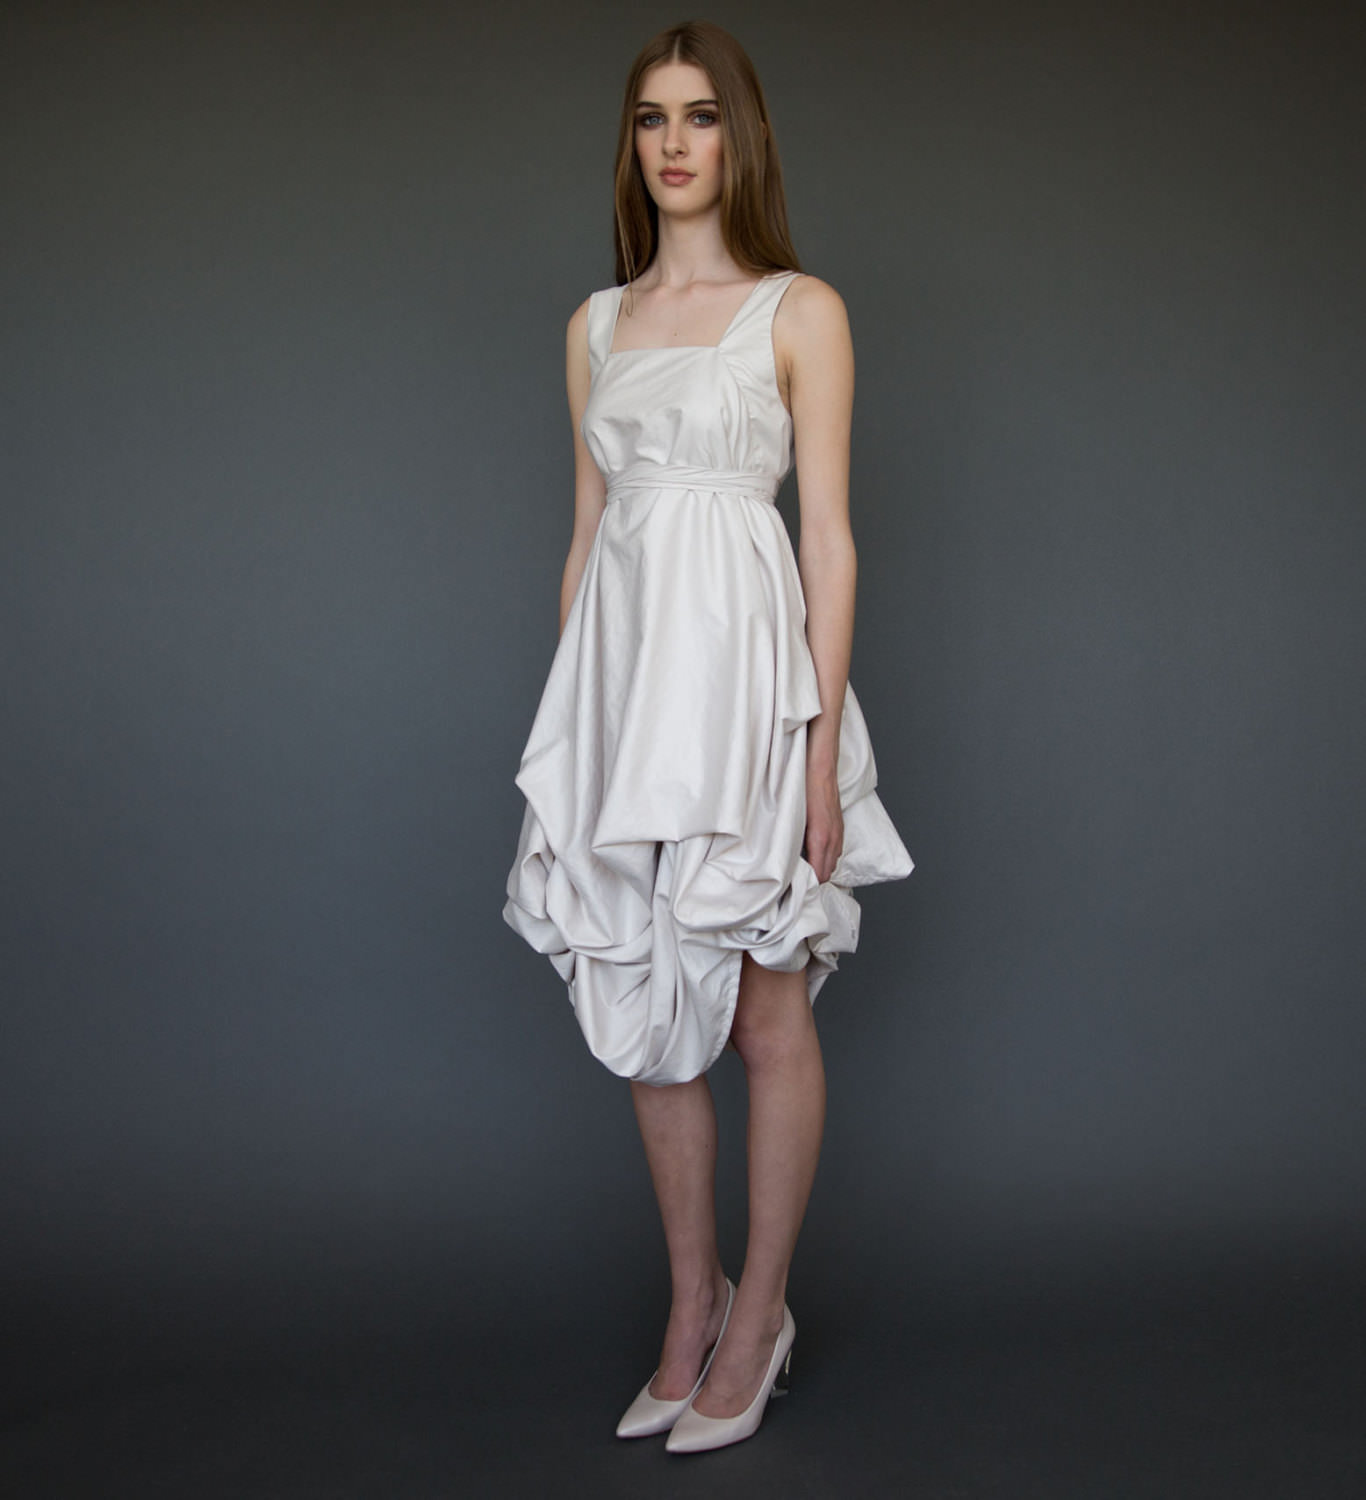 21+ Short Wedding Dress Designs, Ideas Design Trends